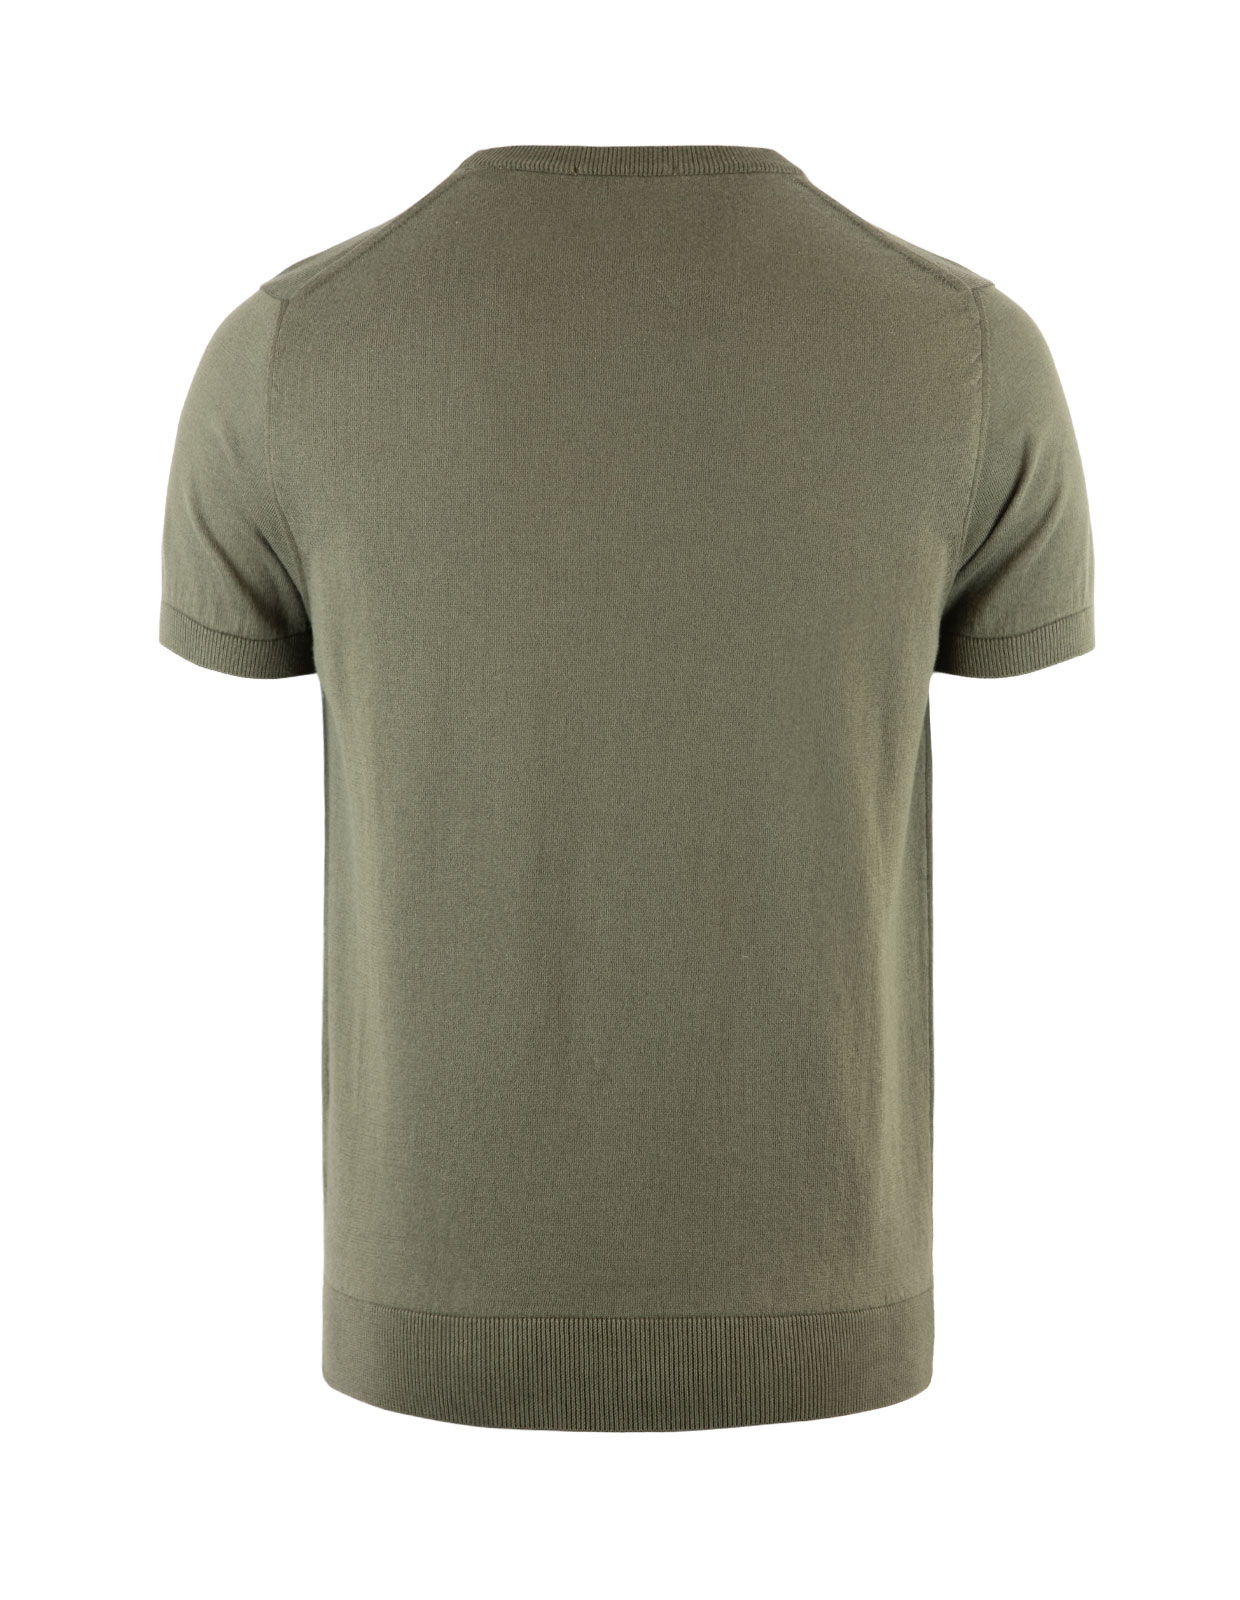 T-Shirt Knitted Cotton Grigio Verde